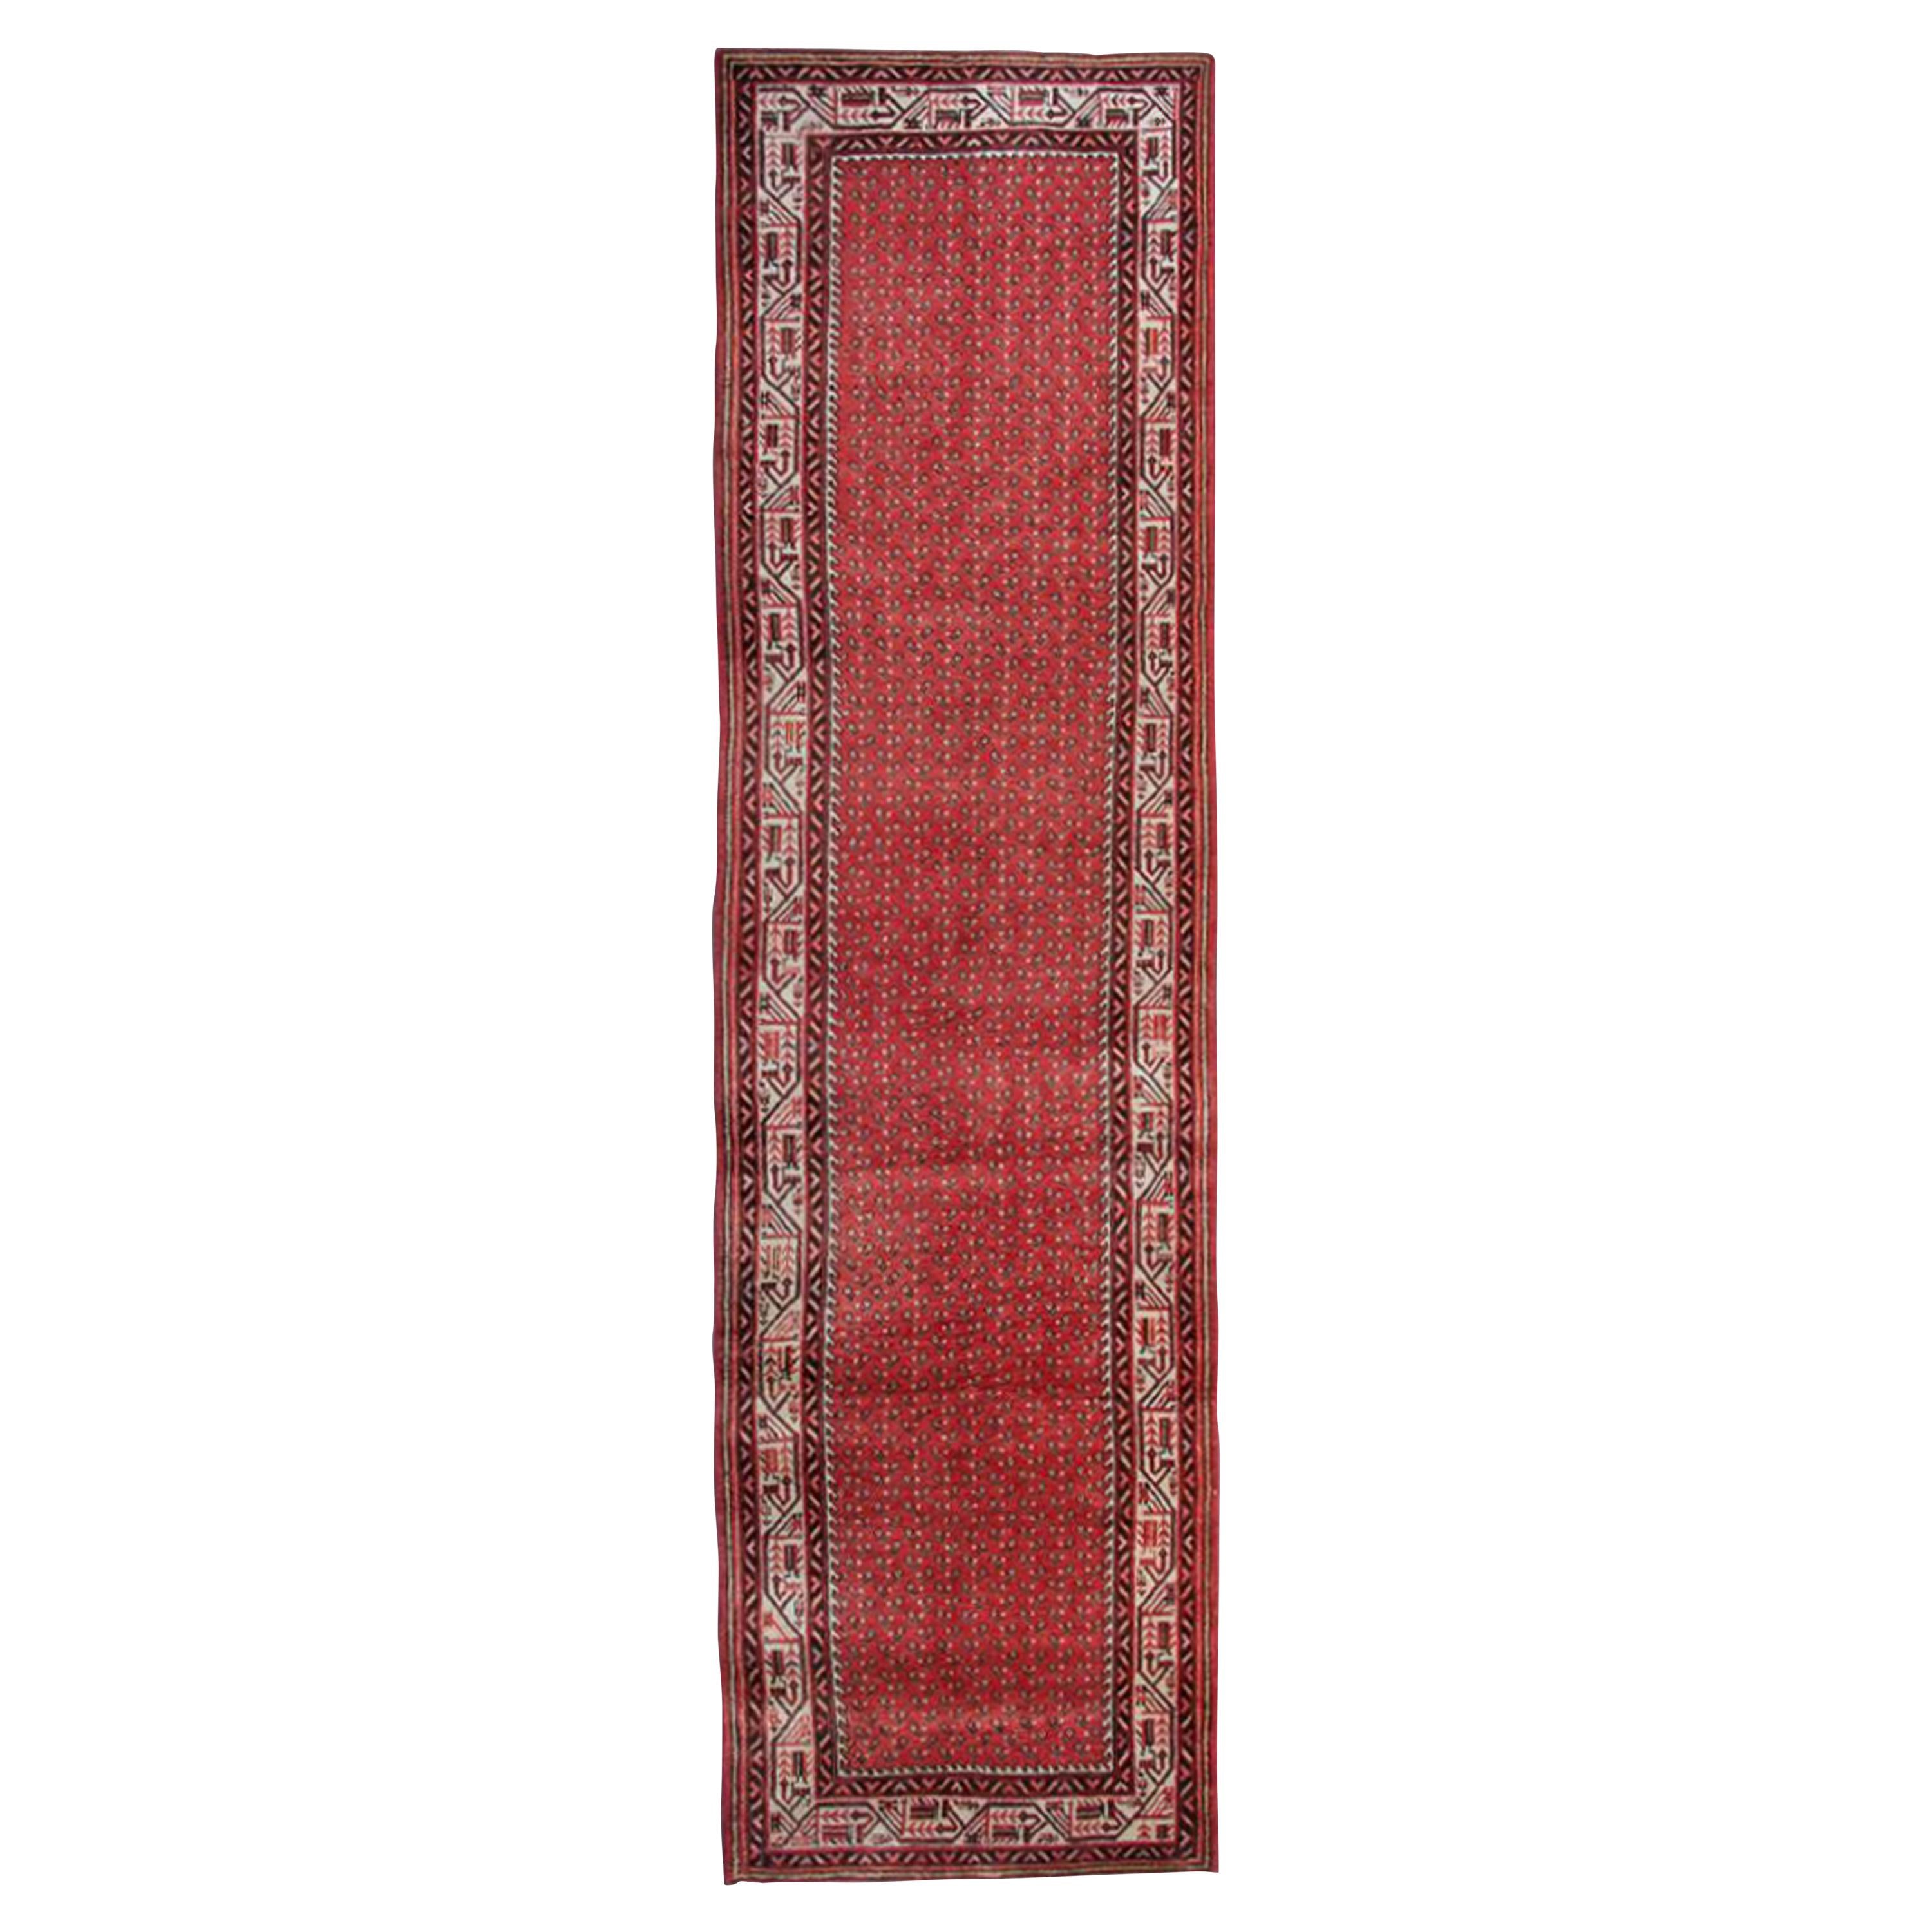 Oriental Red Runner Rug, Traditional Long Wool Carpet Handmade Vintage For Sale